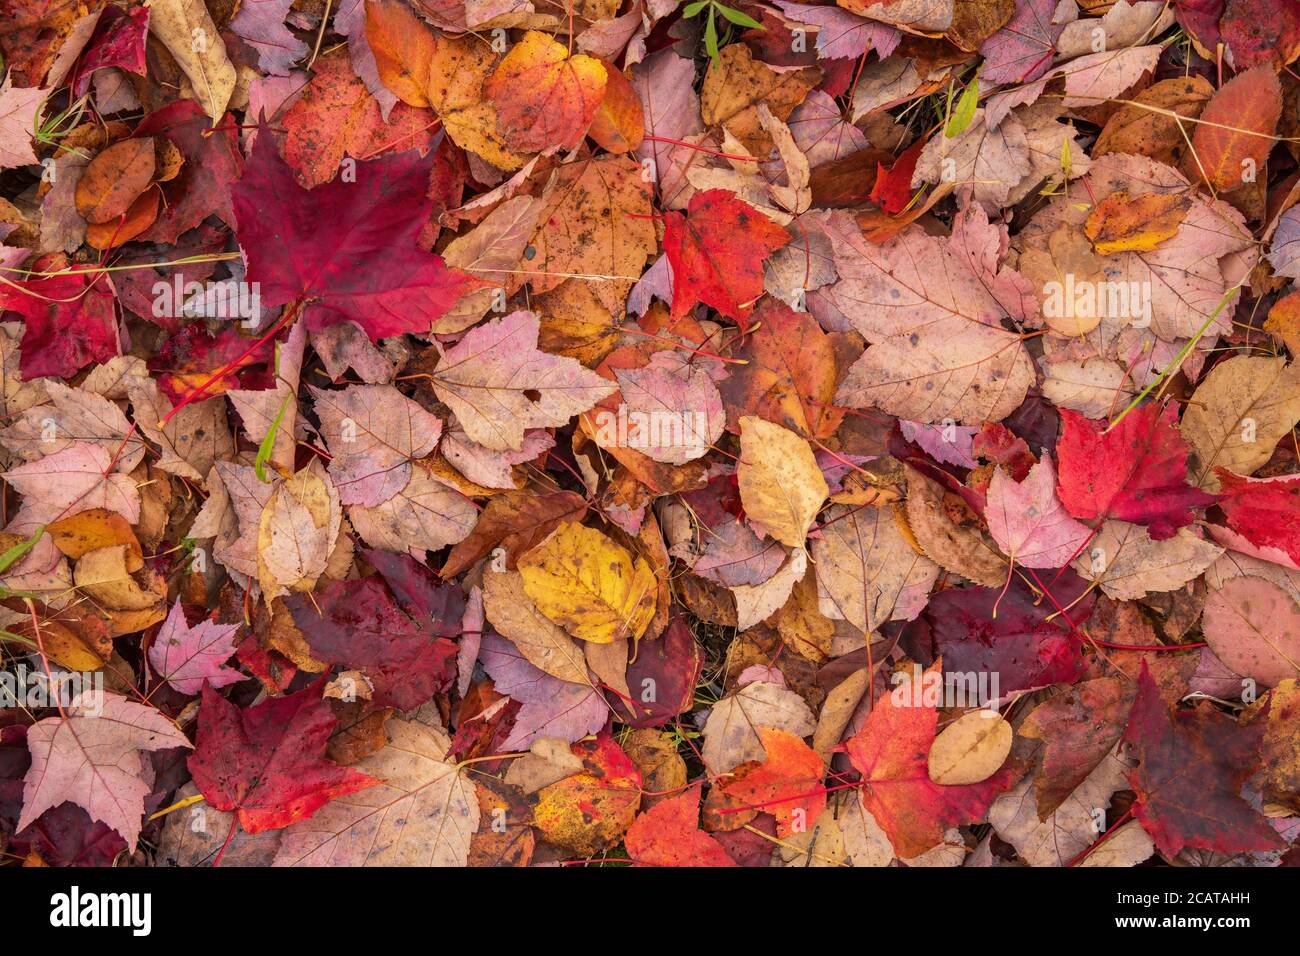 Colorful fallen leaves near Wentworth, Nova Scotia, Canada. Stock Photo